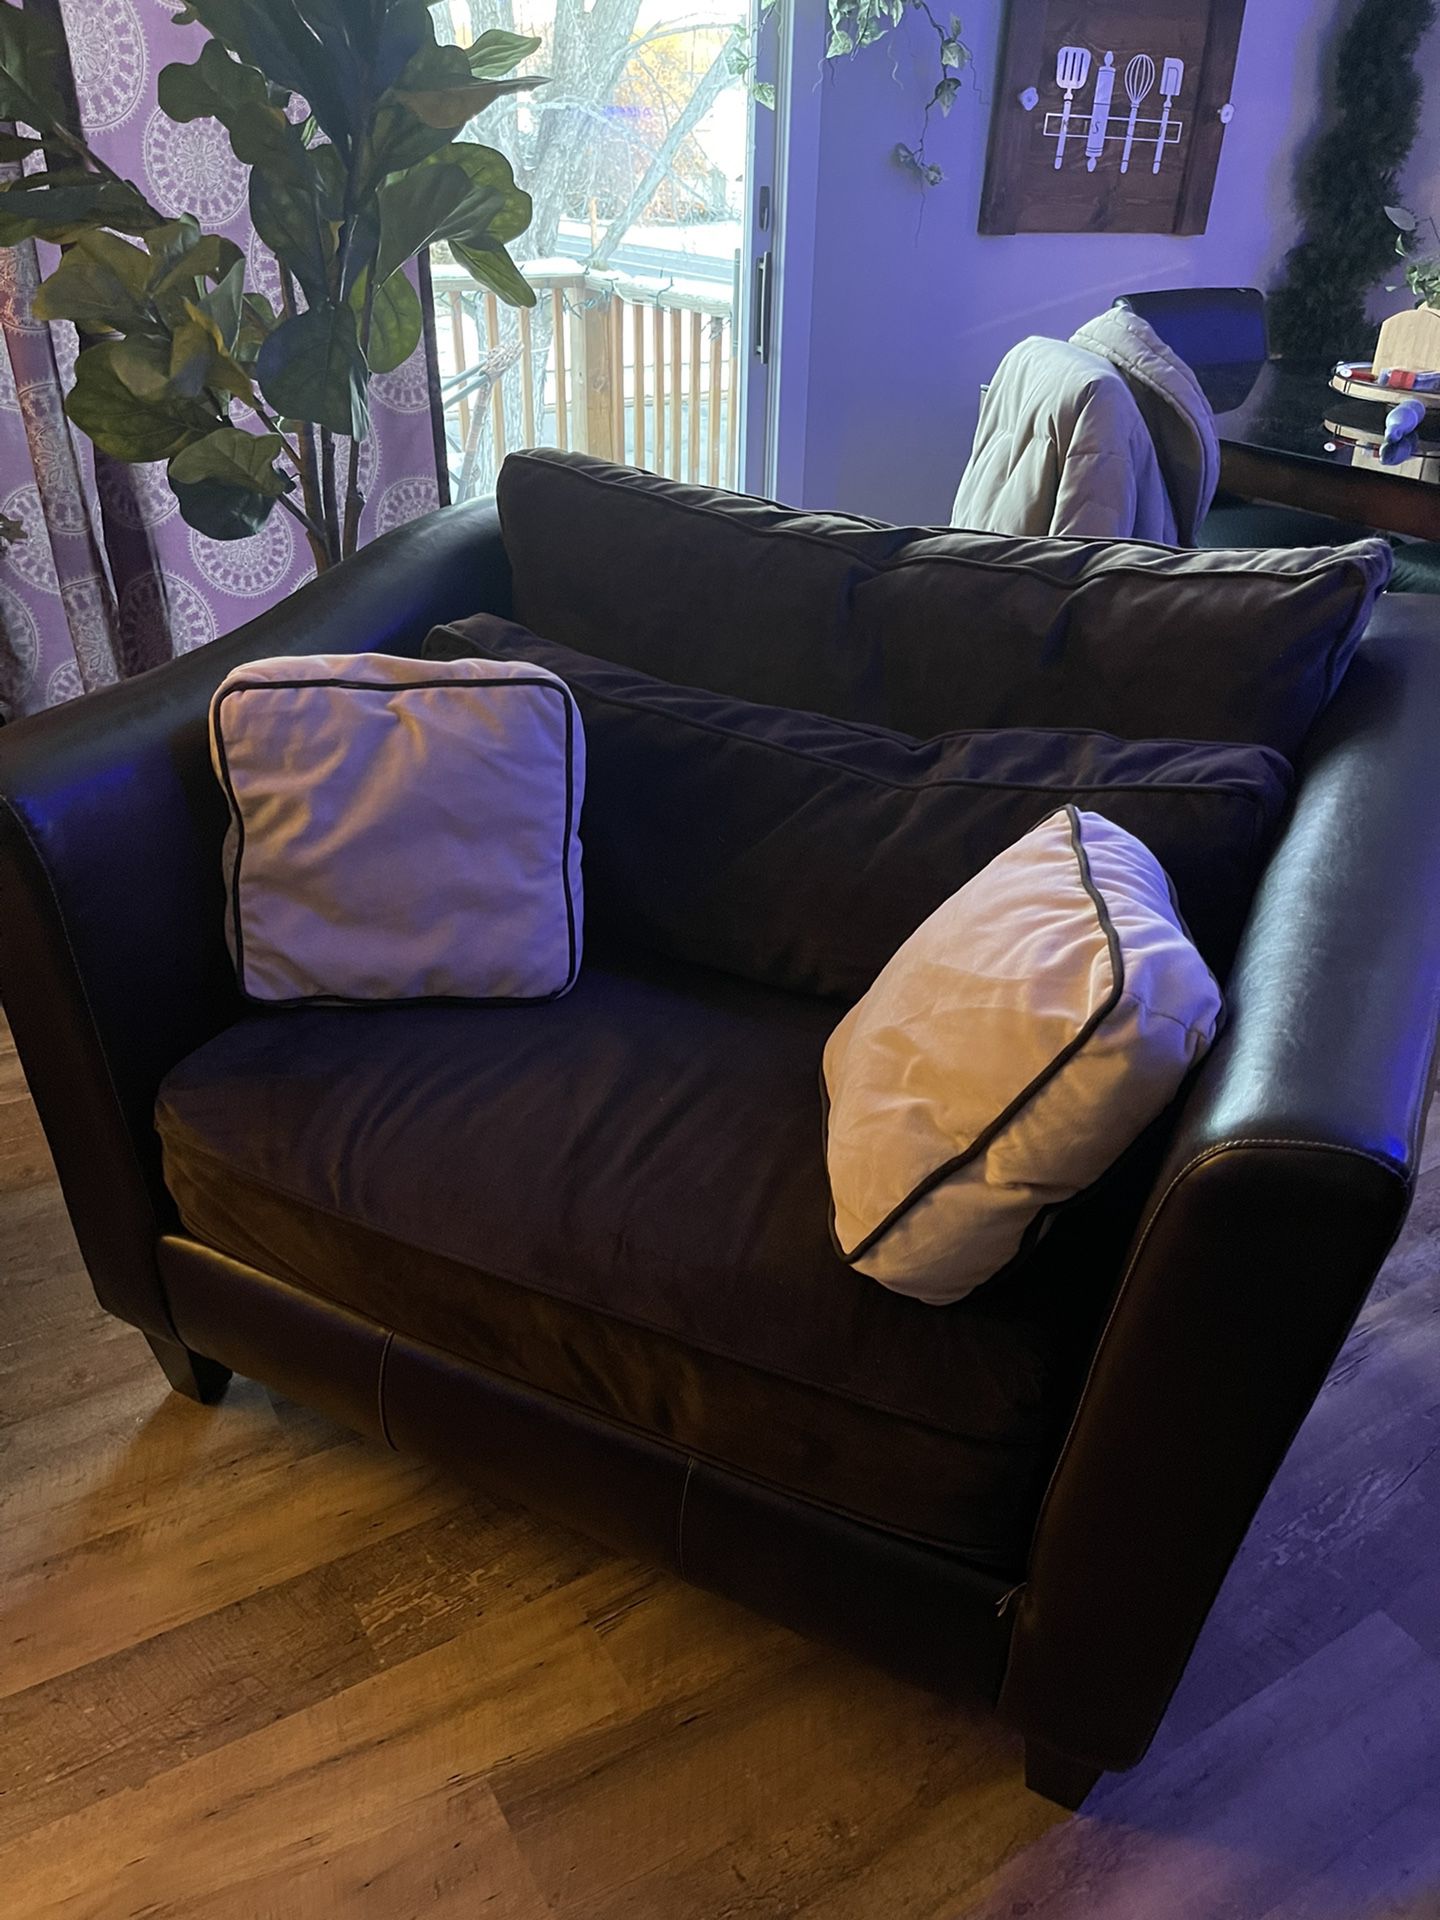 Large Sofa Love Chair /$180